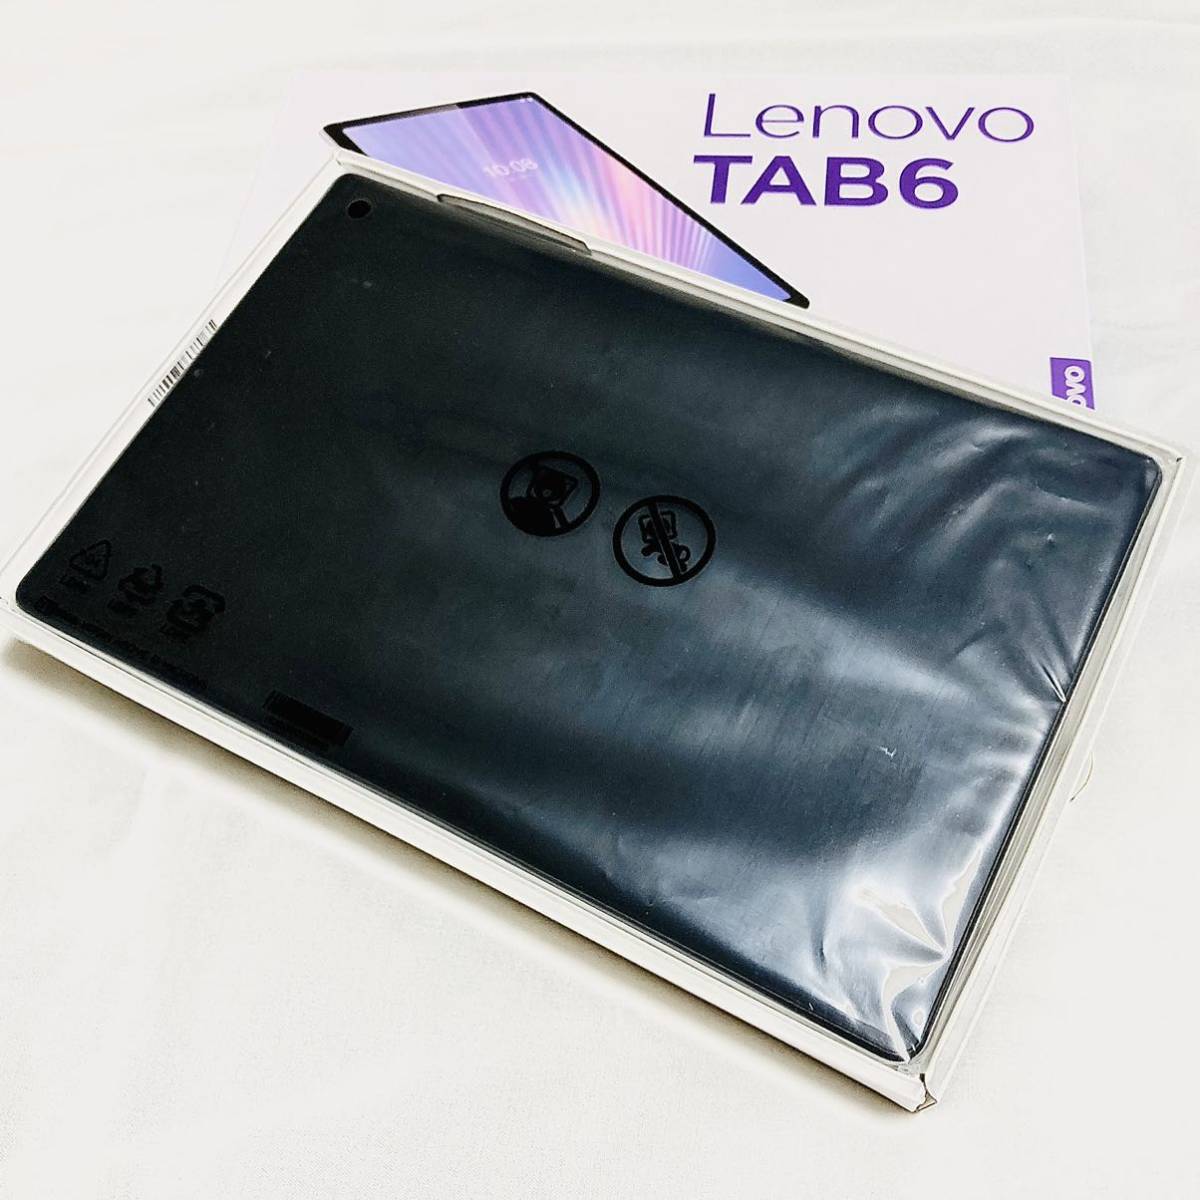 Lenovo TAB6 SIMフリー 一括購入 残債なし ネットワーク利用制限〇